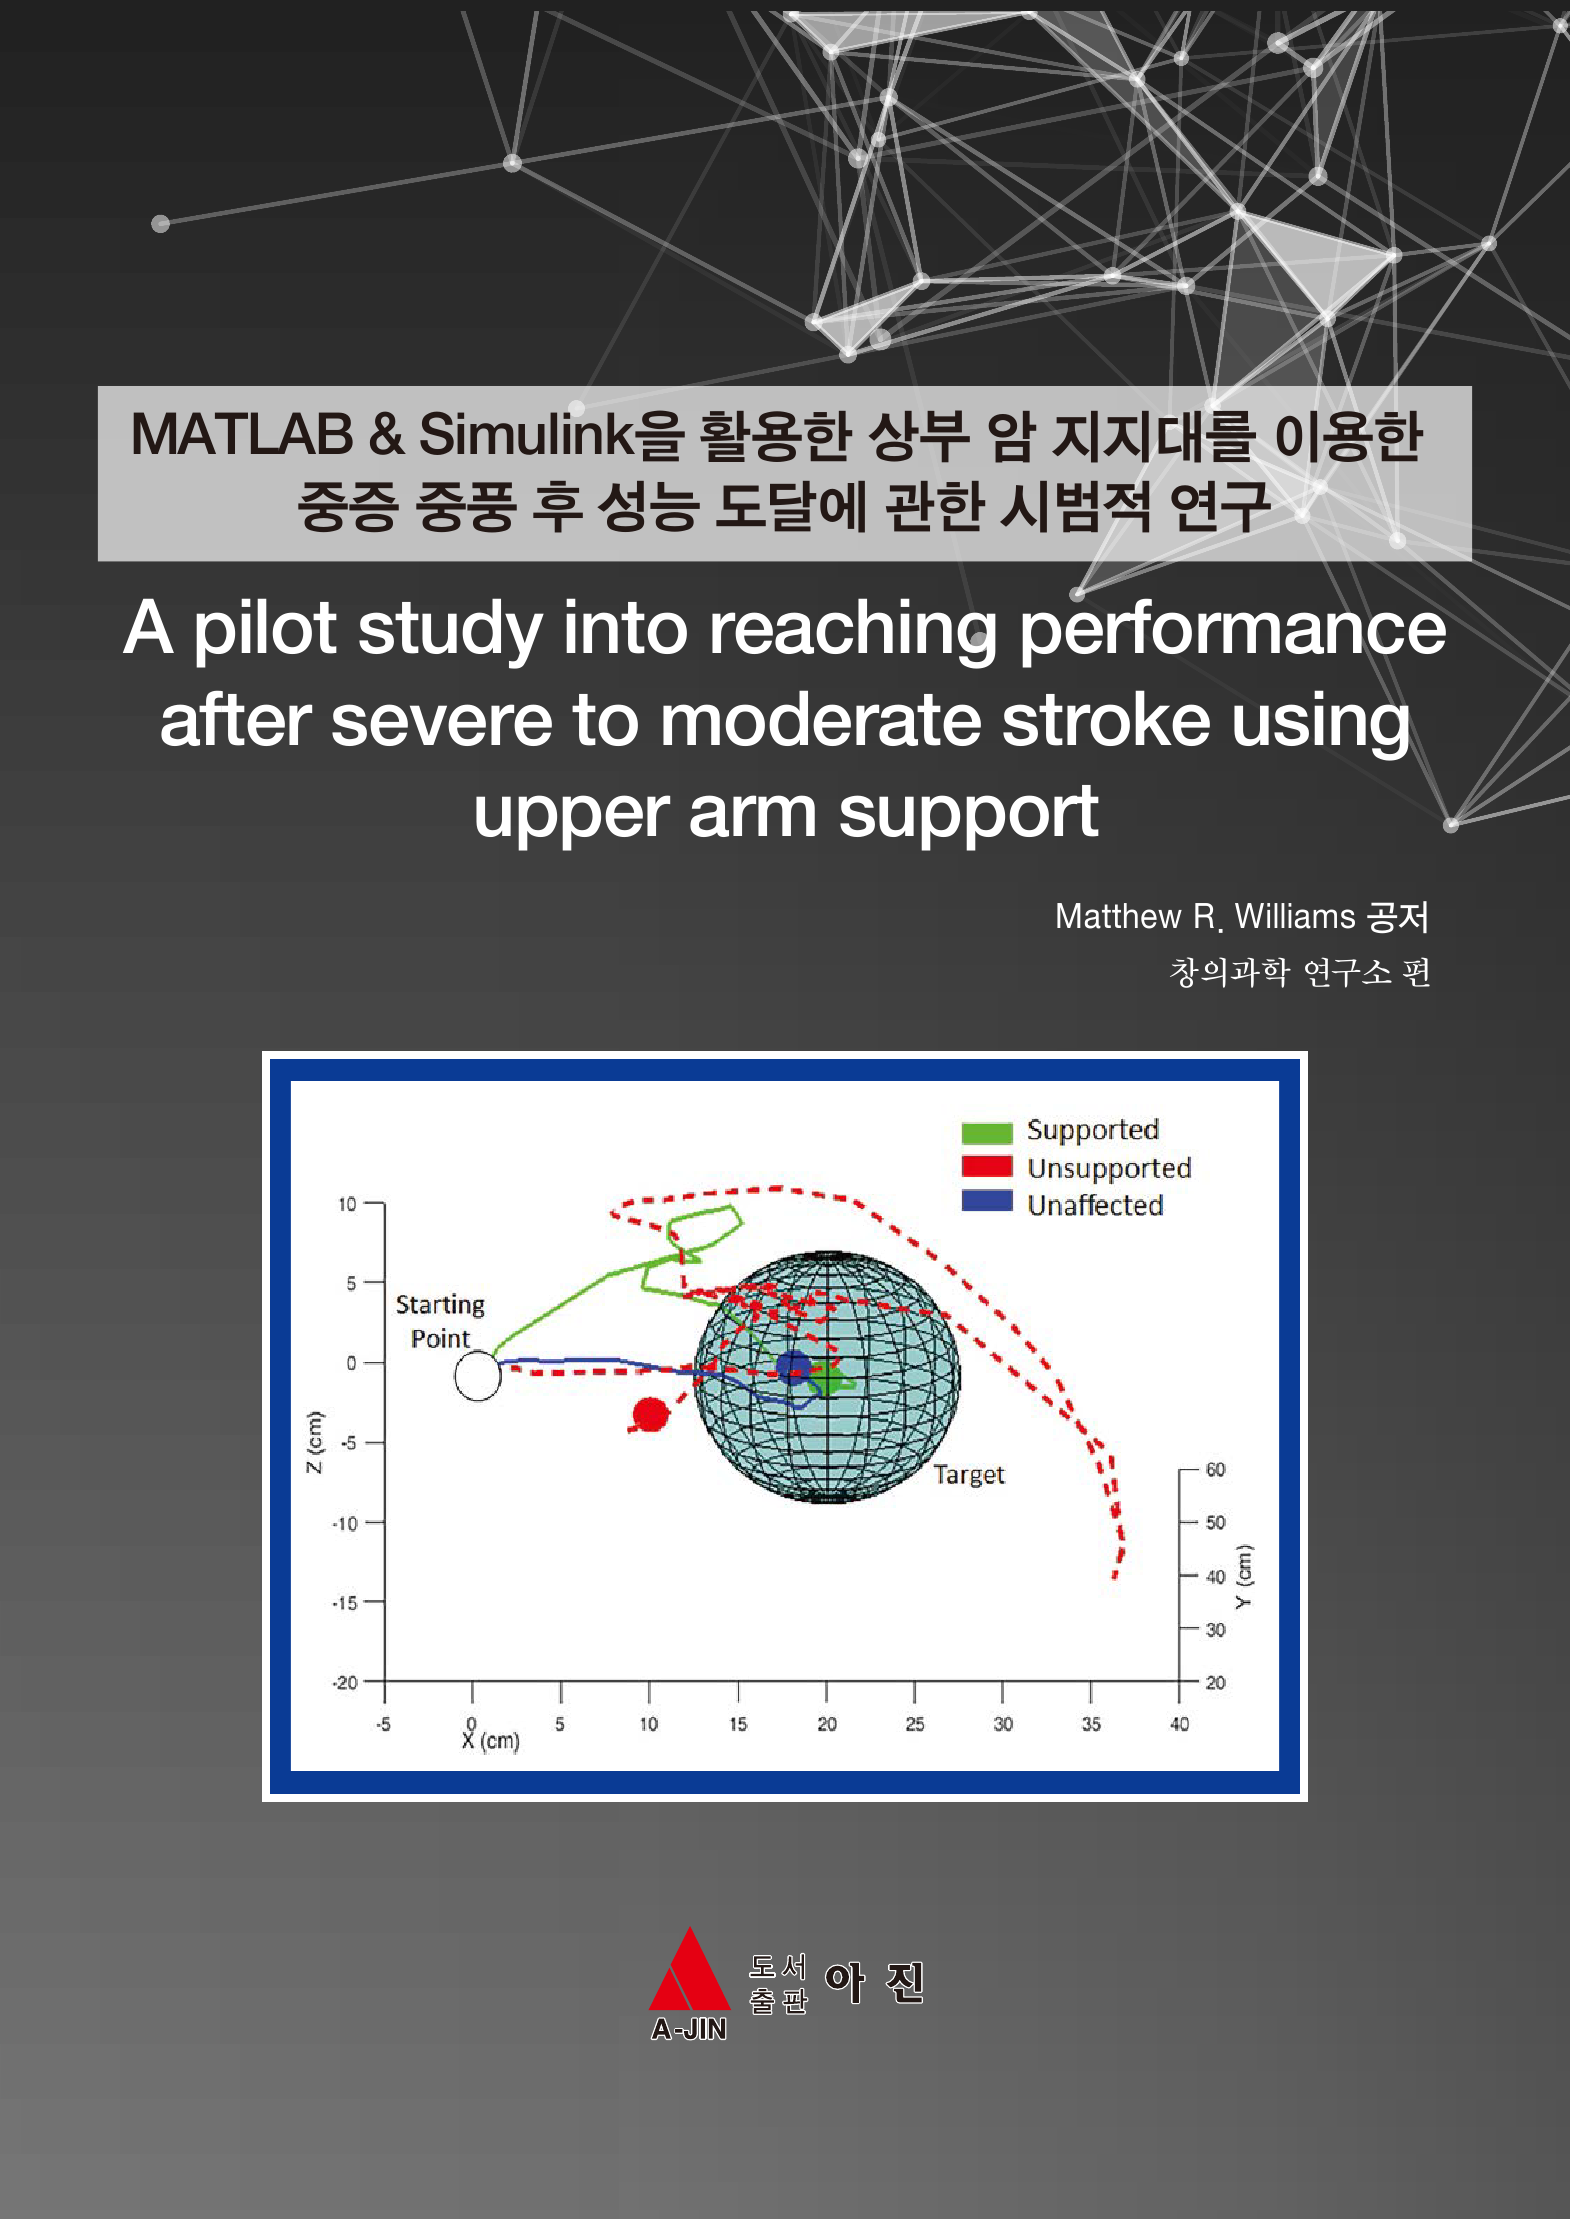 MATLAB & Simulink을 활용한 상부 암 지지대를 이용한 중증 중풍 후 성능 도달에 관한 시범적 연구(A pilot study into reaching performance after severe to moderate stroke using upper arm support)